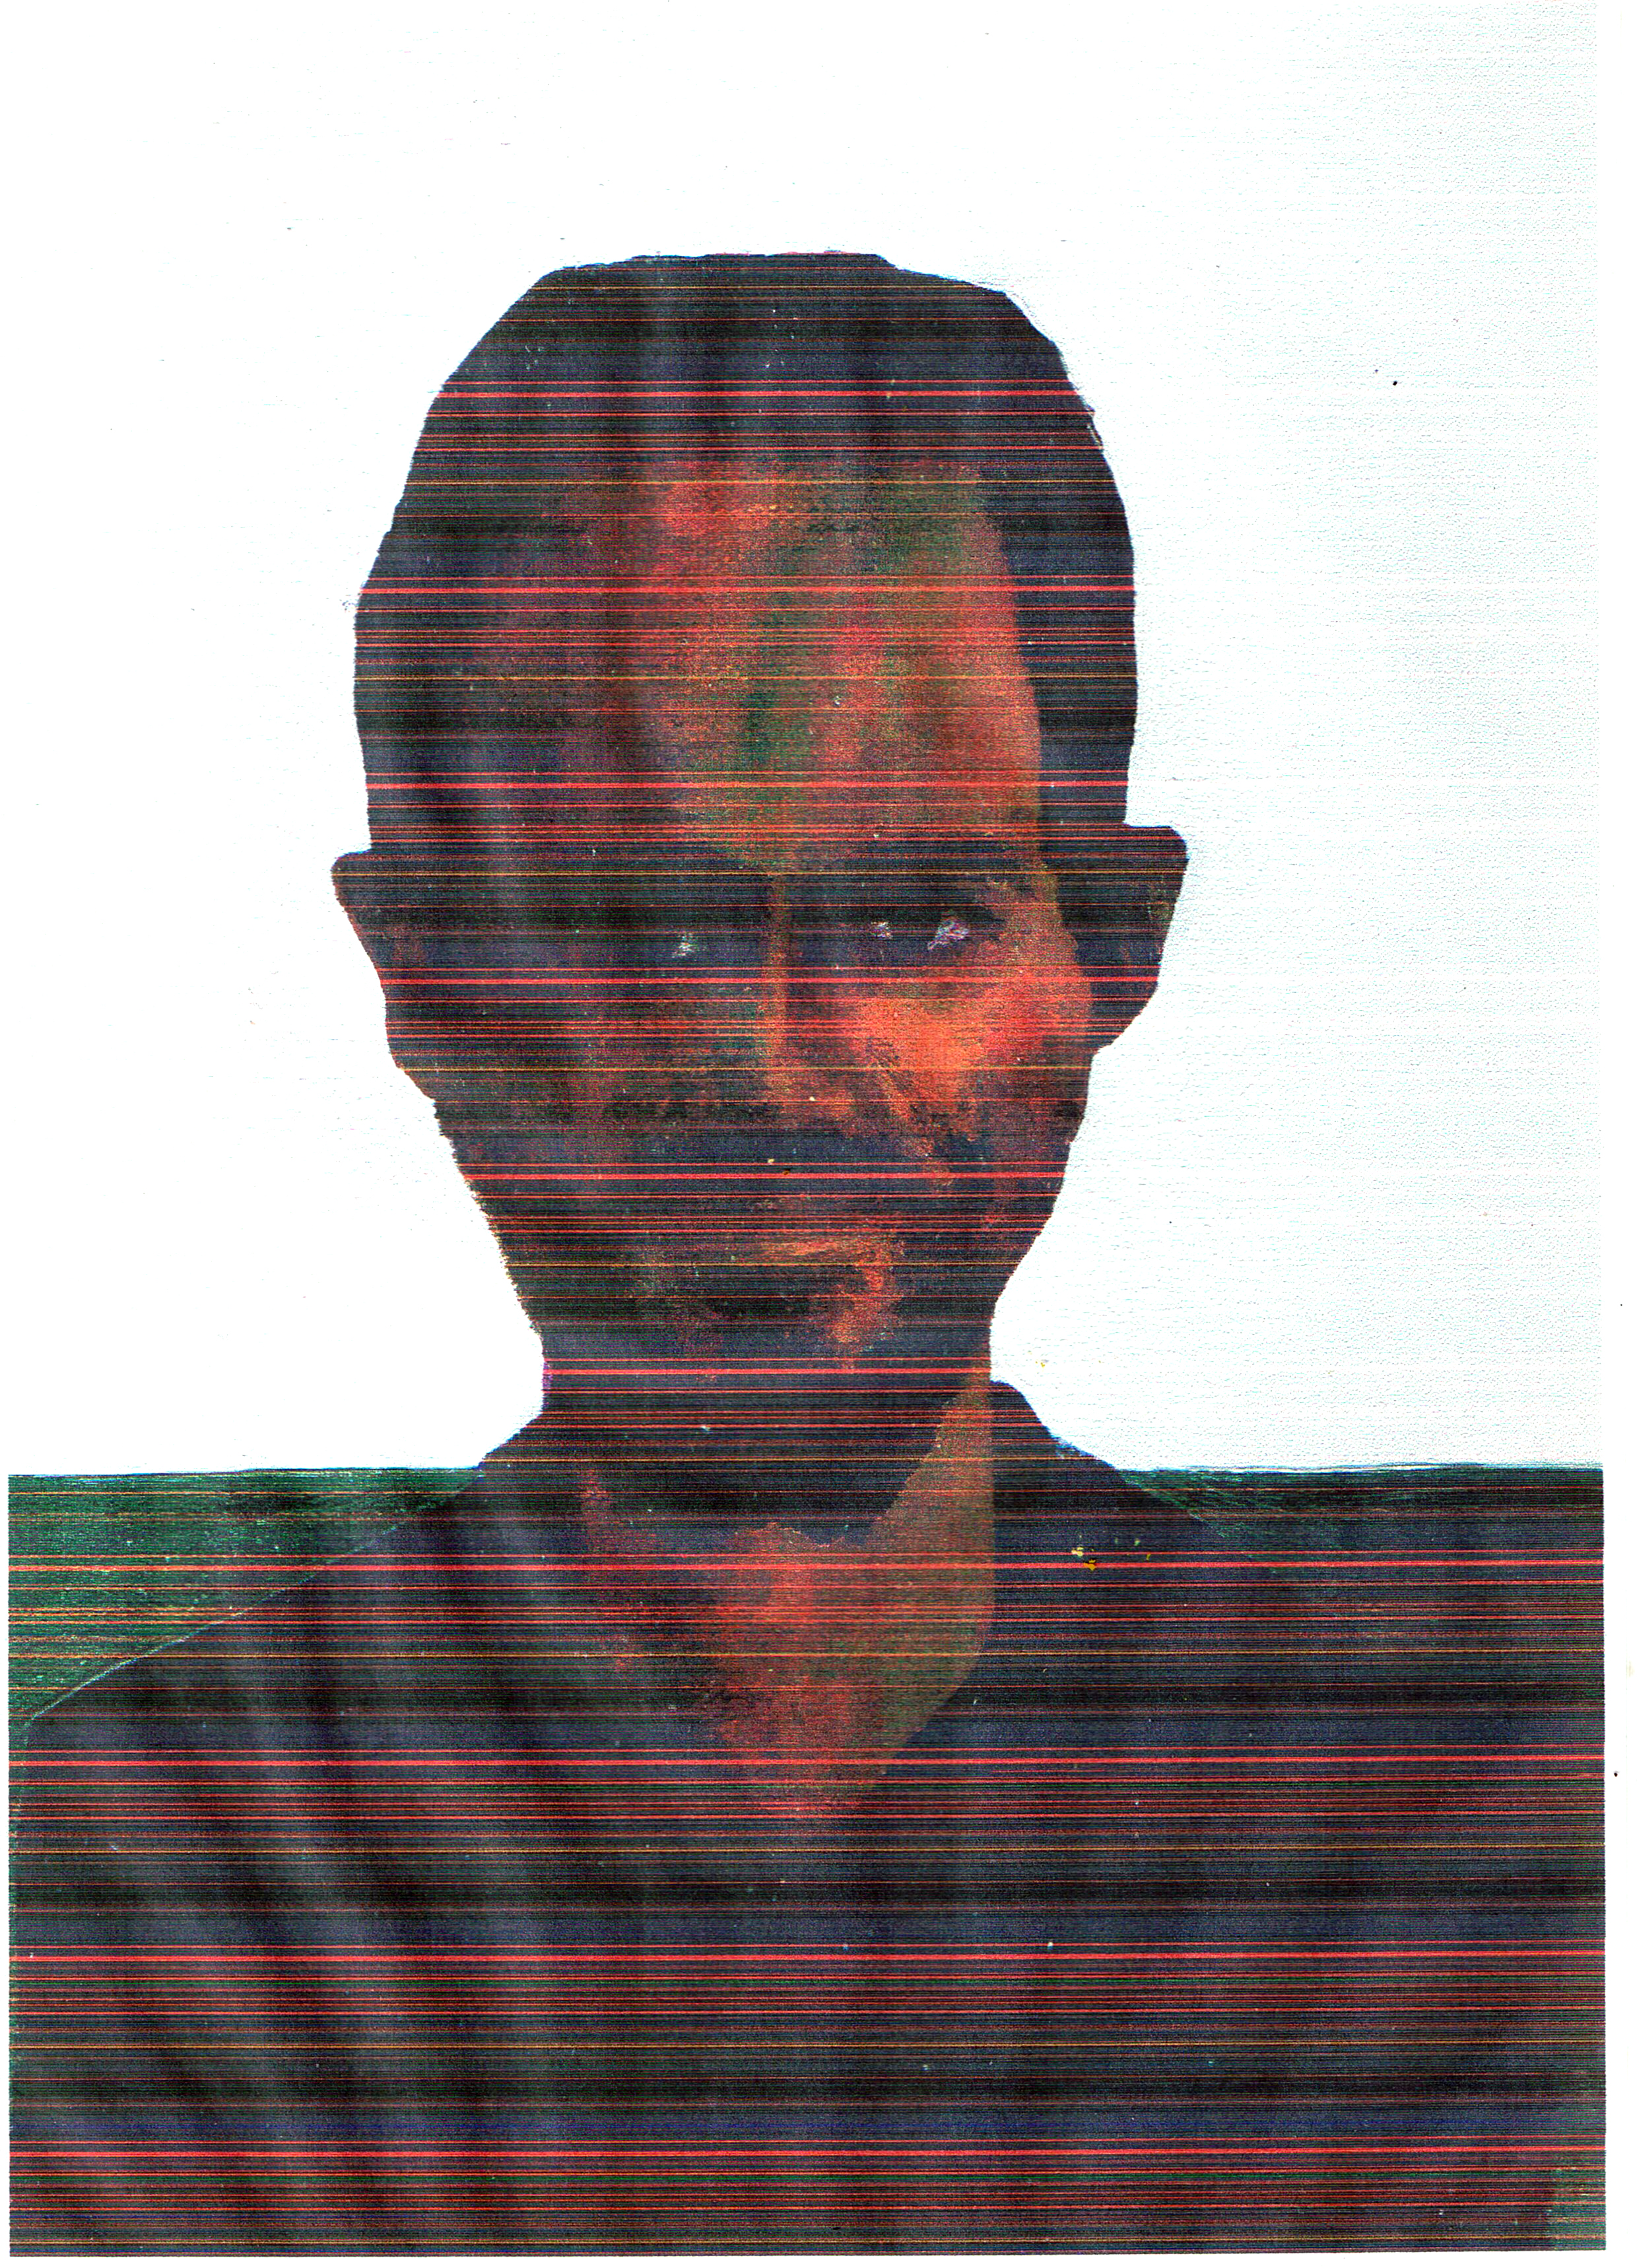 Portrait of Malik Ameer Crumpler, as part of the Inevitable Mutations, Act II exhibition